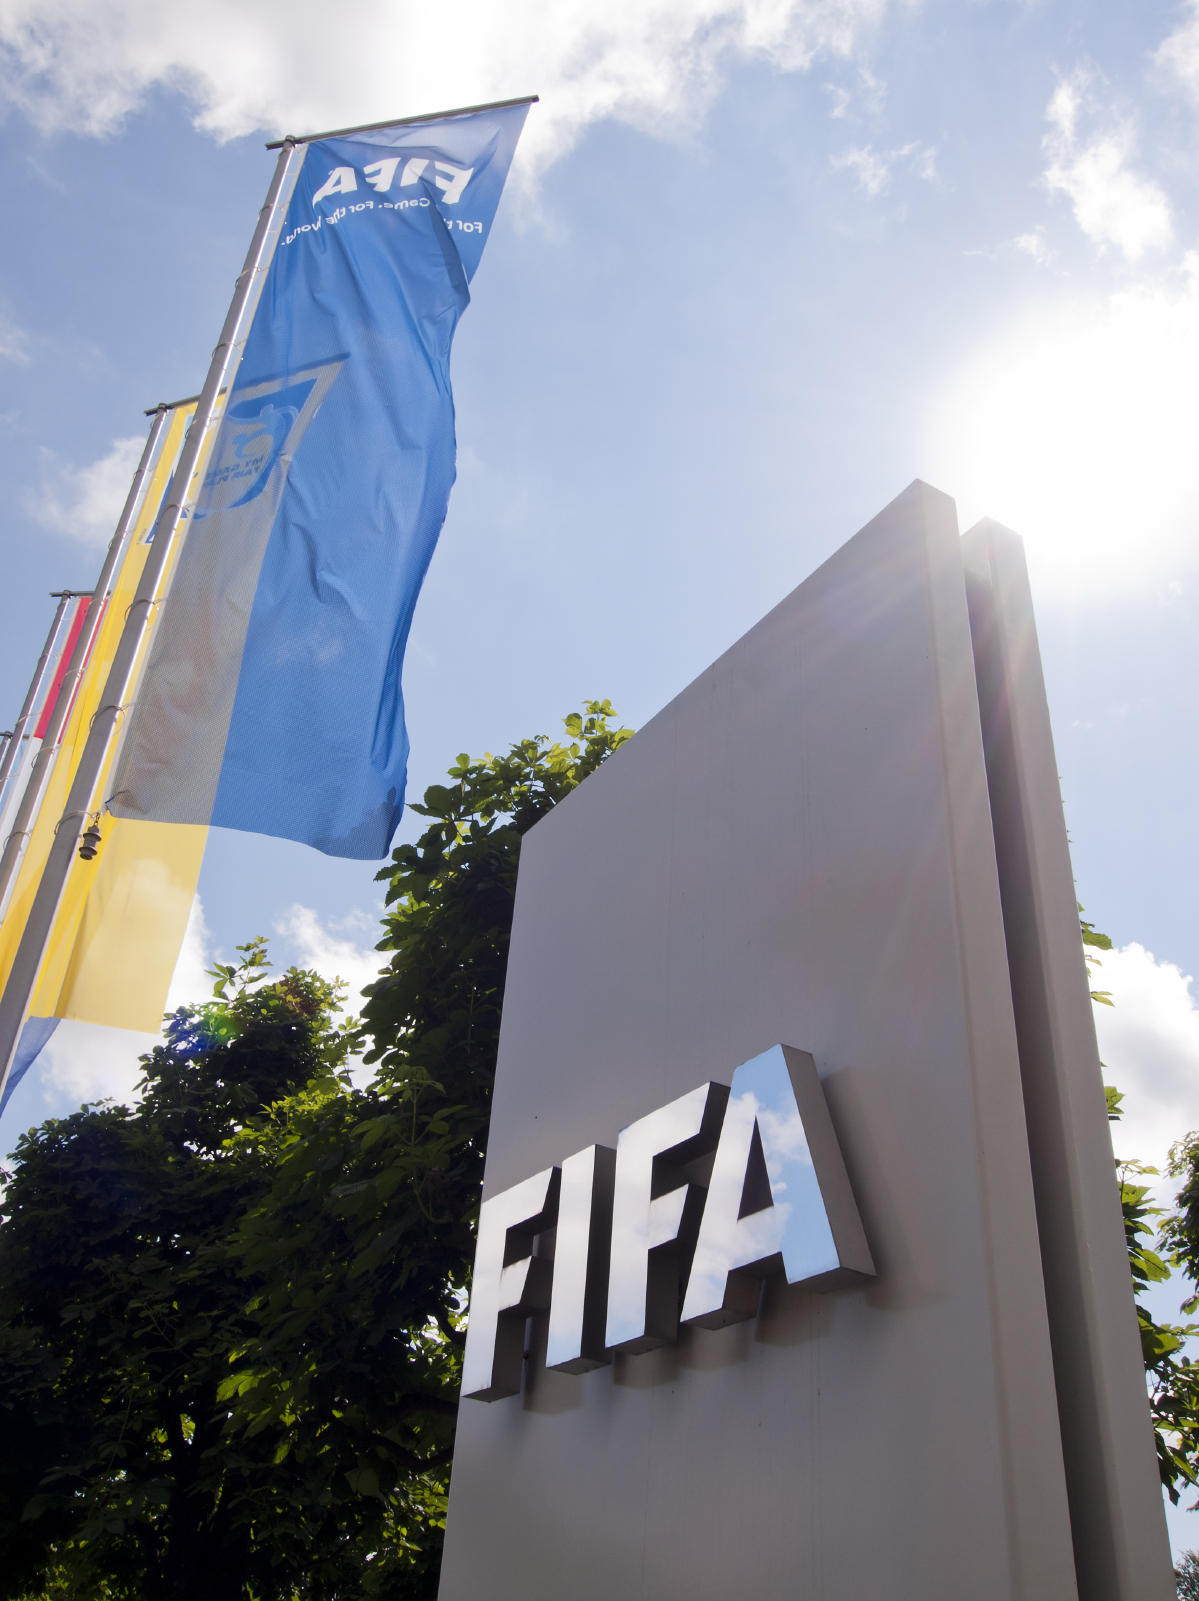 Entrance to the FIFA headquarters in Zurich, Switzerland